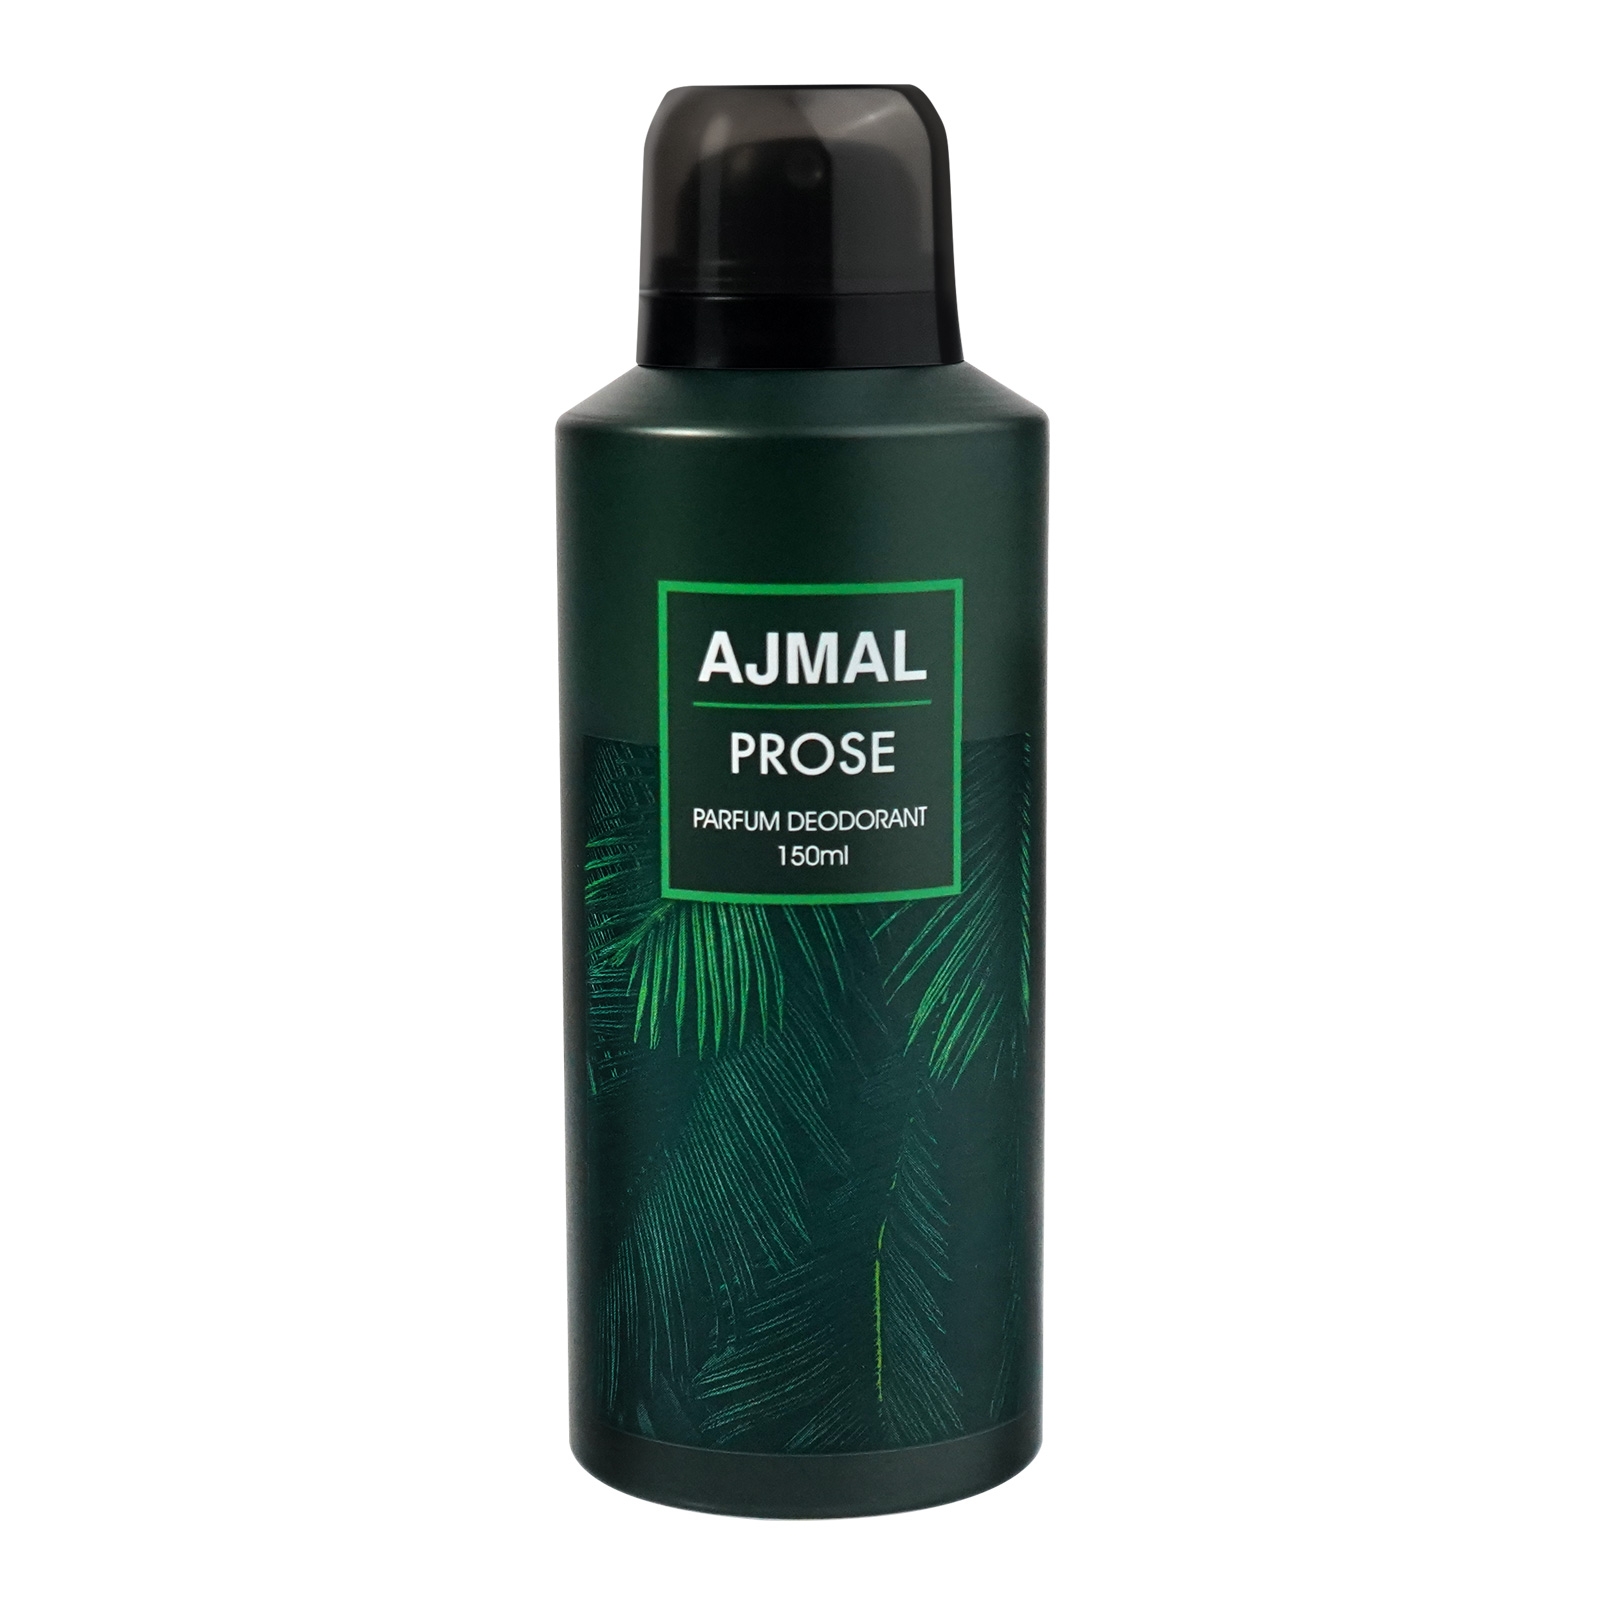 Ajmal | Ajmal Prose Deodorant Fougere Perfume 150ML Long Lasting Scent Spray Casual Wear Gift For Men